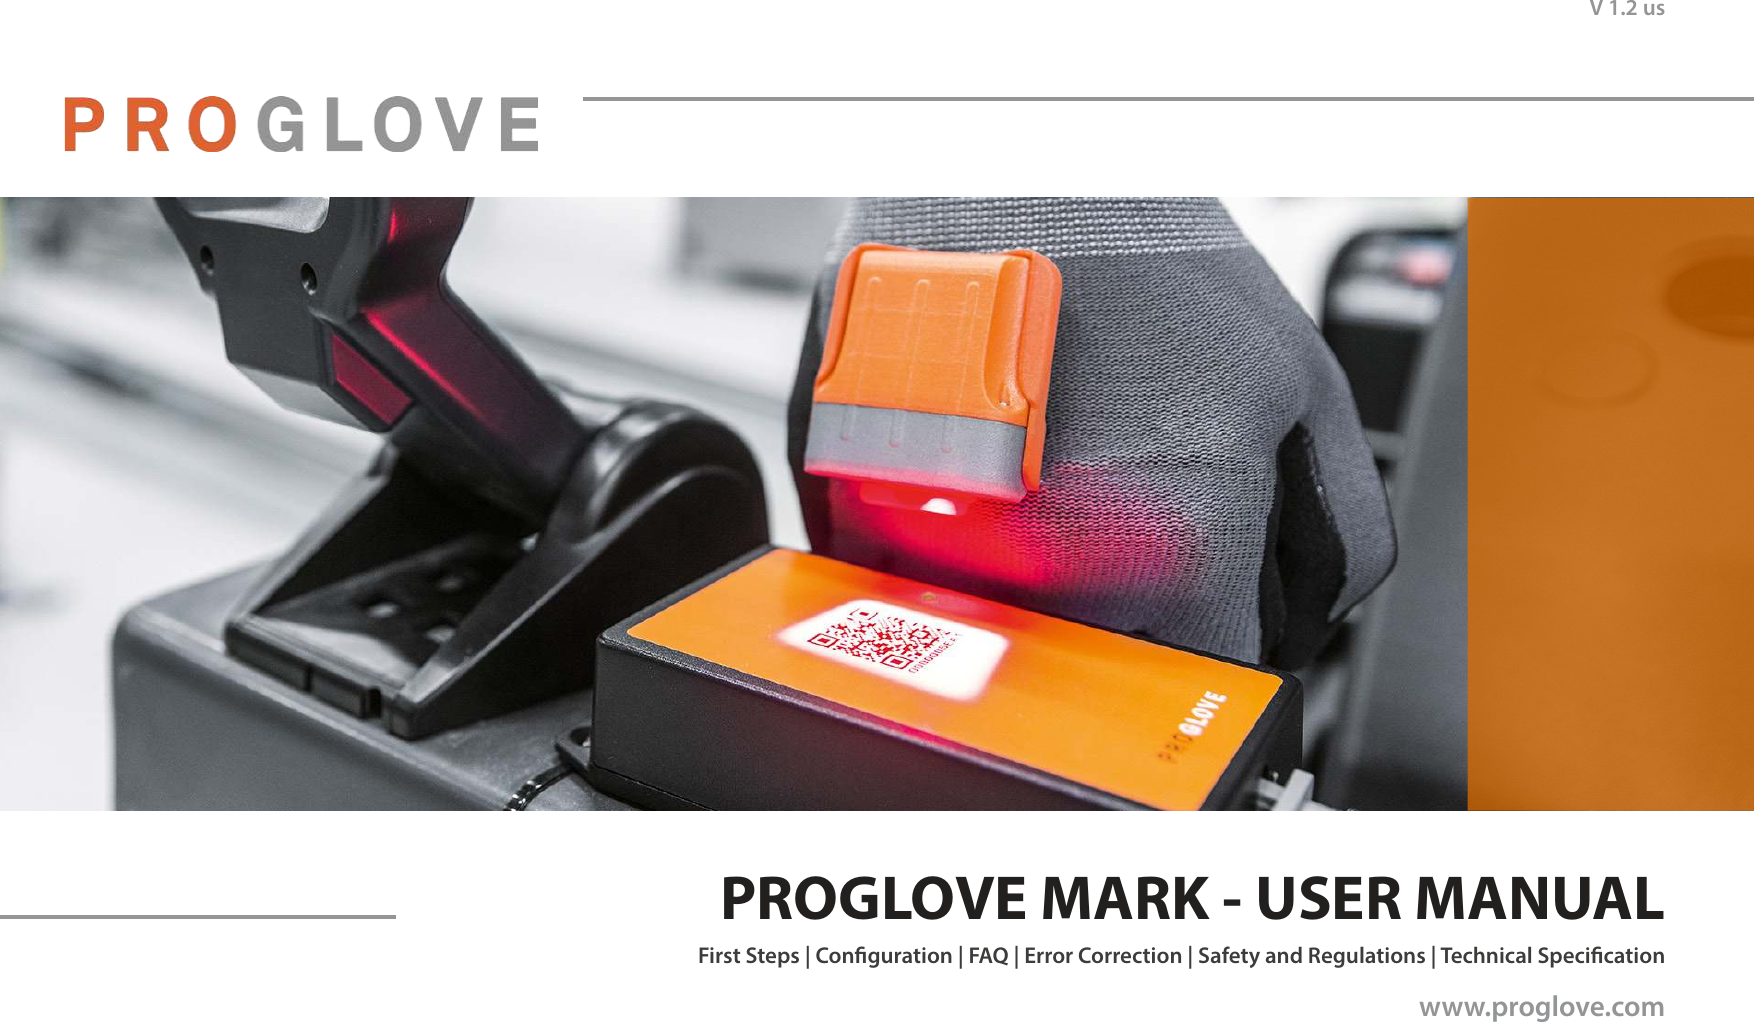 1ProGlove Mark - User ManualFirst Steps | Conguration | FAQ | Error Correction | Safety and Regulations | Technical Specicationwww.proglove.comPROGLOVE MARK - USER MANUALV 1.2 us